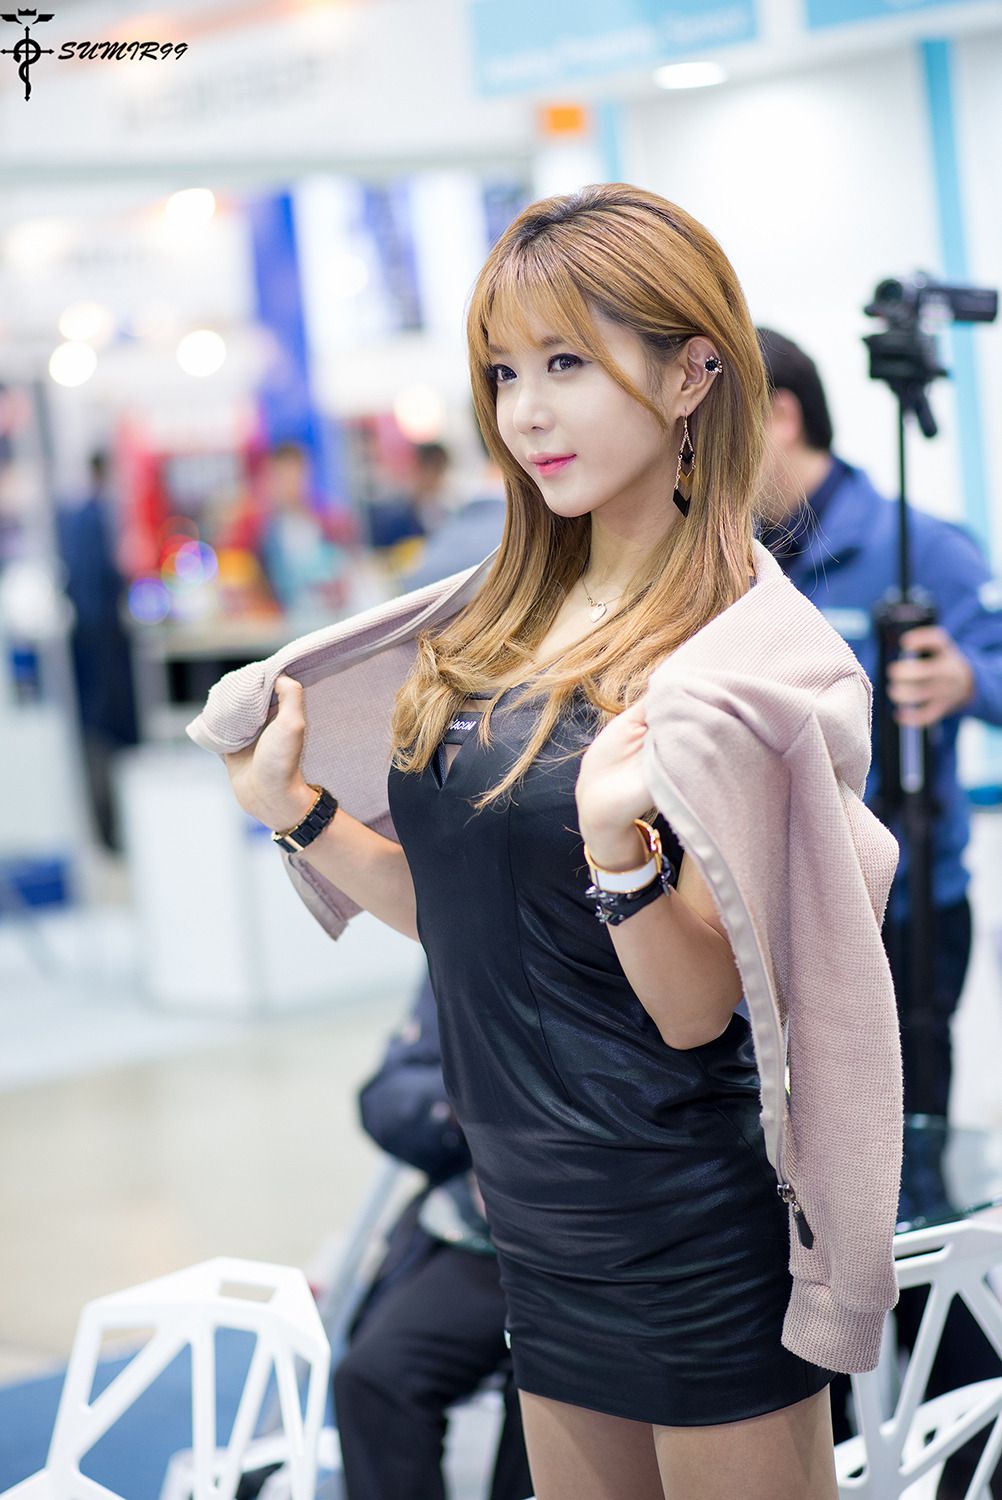 Collection de photos de "Seoul World of Automation Exhibition" par Xu Yunmei 허윤미, Show GIRL, Corée